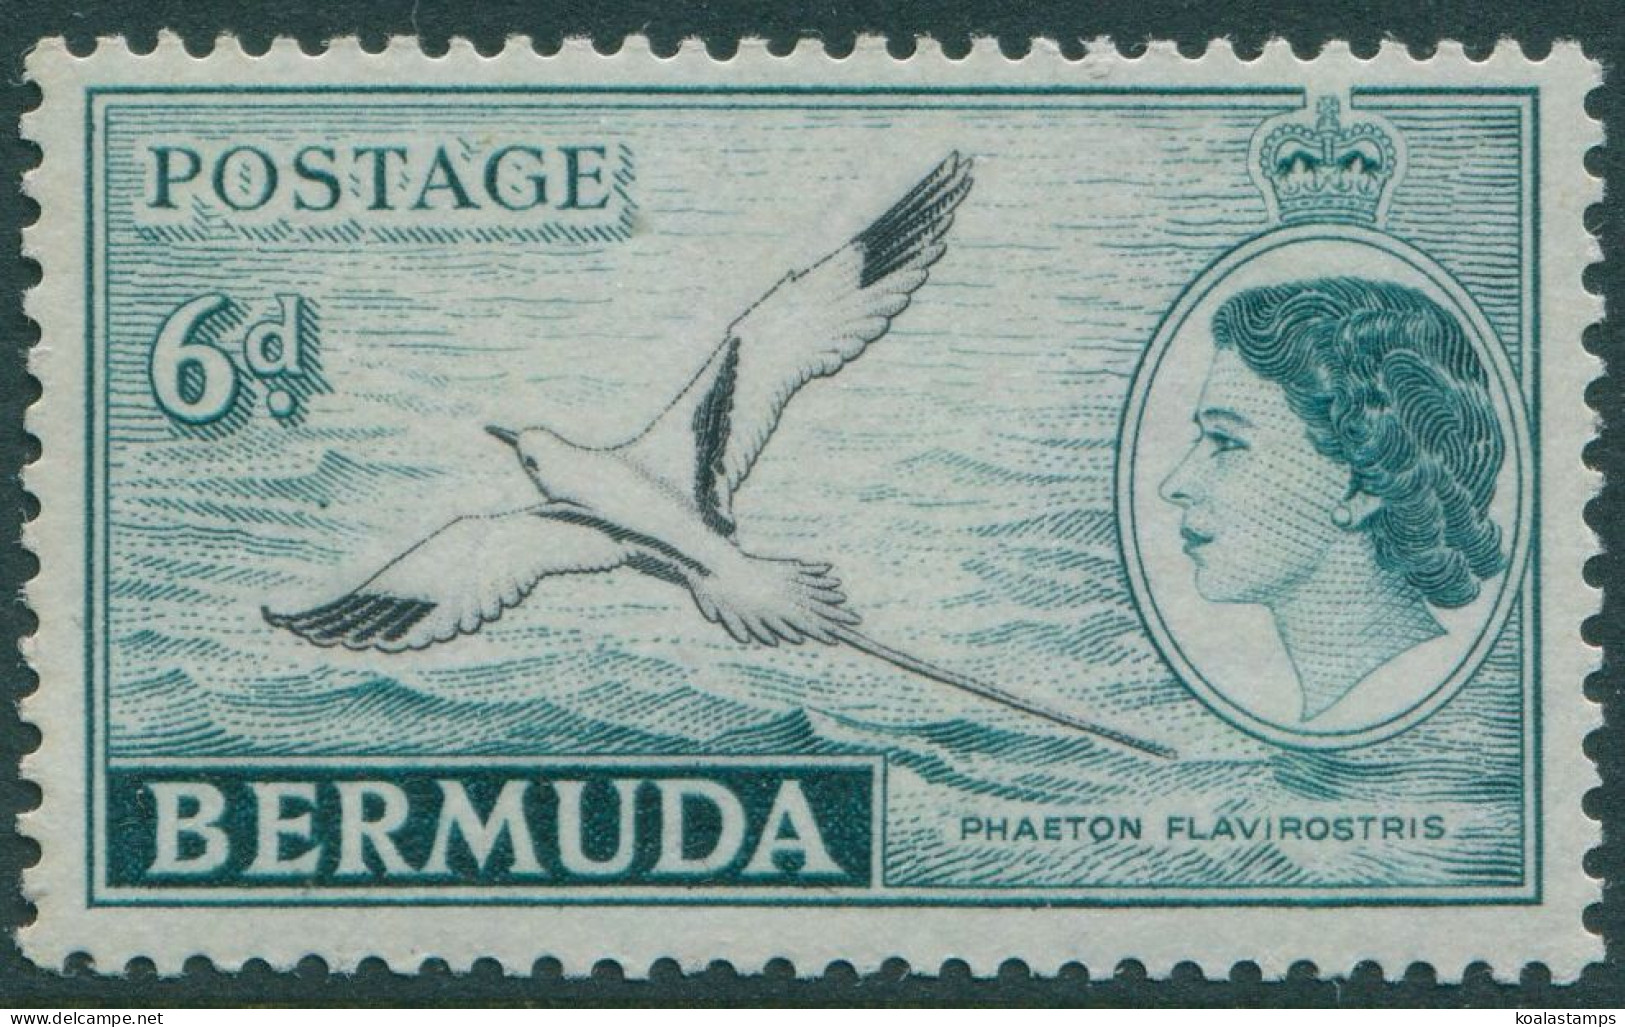 Bermuda 1953 SG143 6d Black And Turquoise QEII White-tailed Tropic Bird MNH - Bermudes